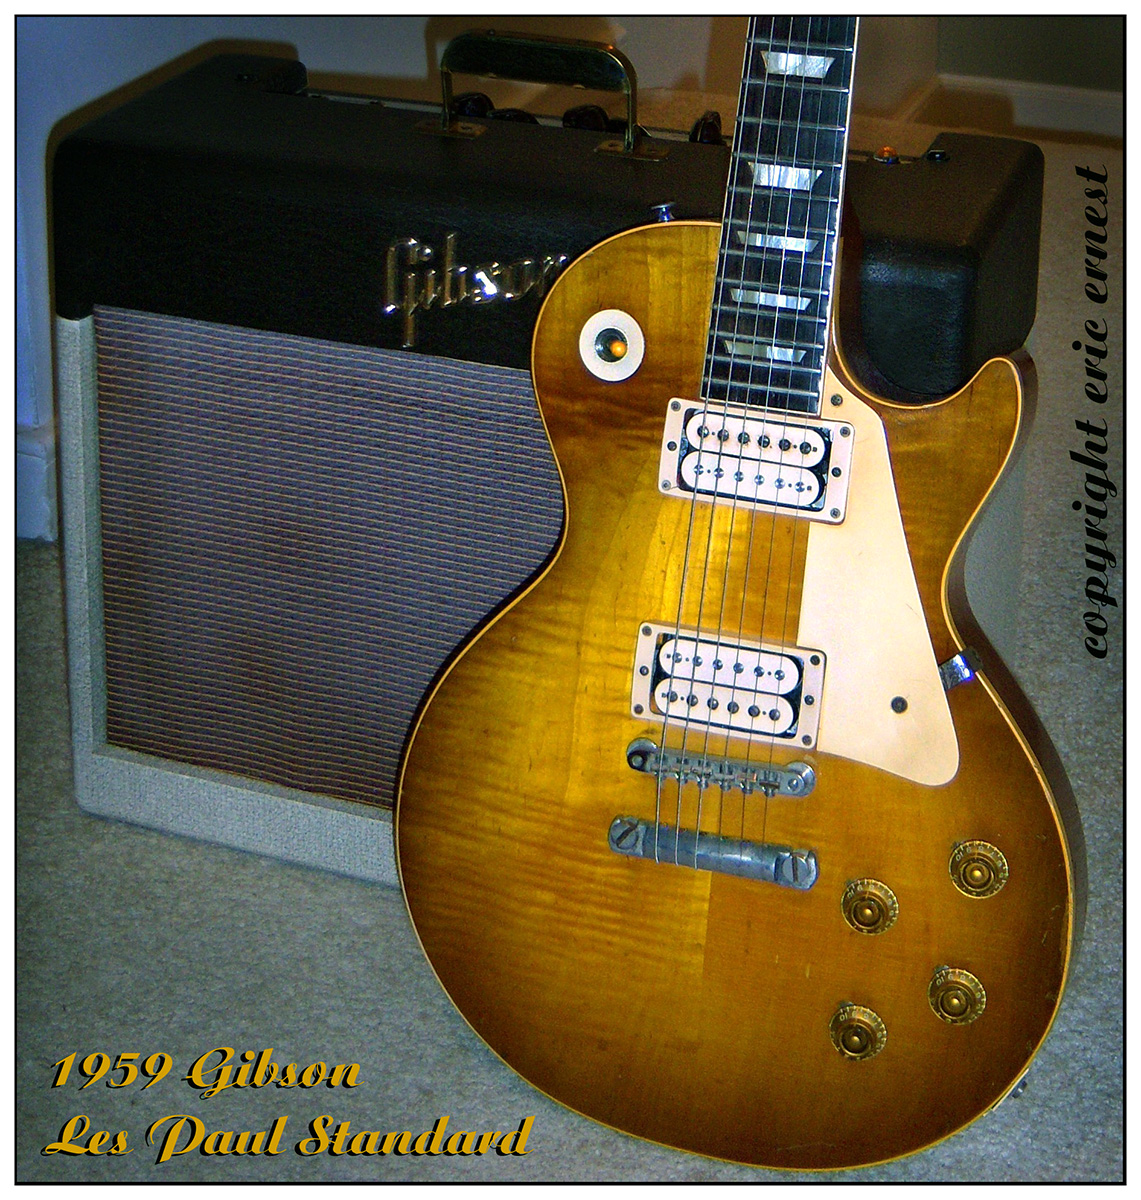 1959 Gibson Les Paul Standard Guitar 9 0919. "The Toilet Seat" Burst!